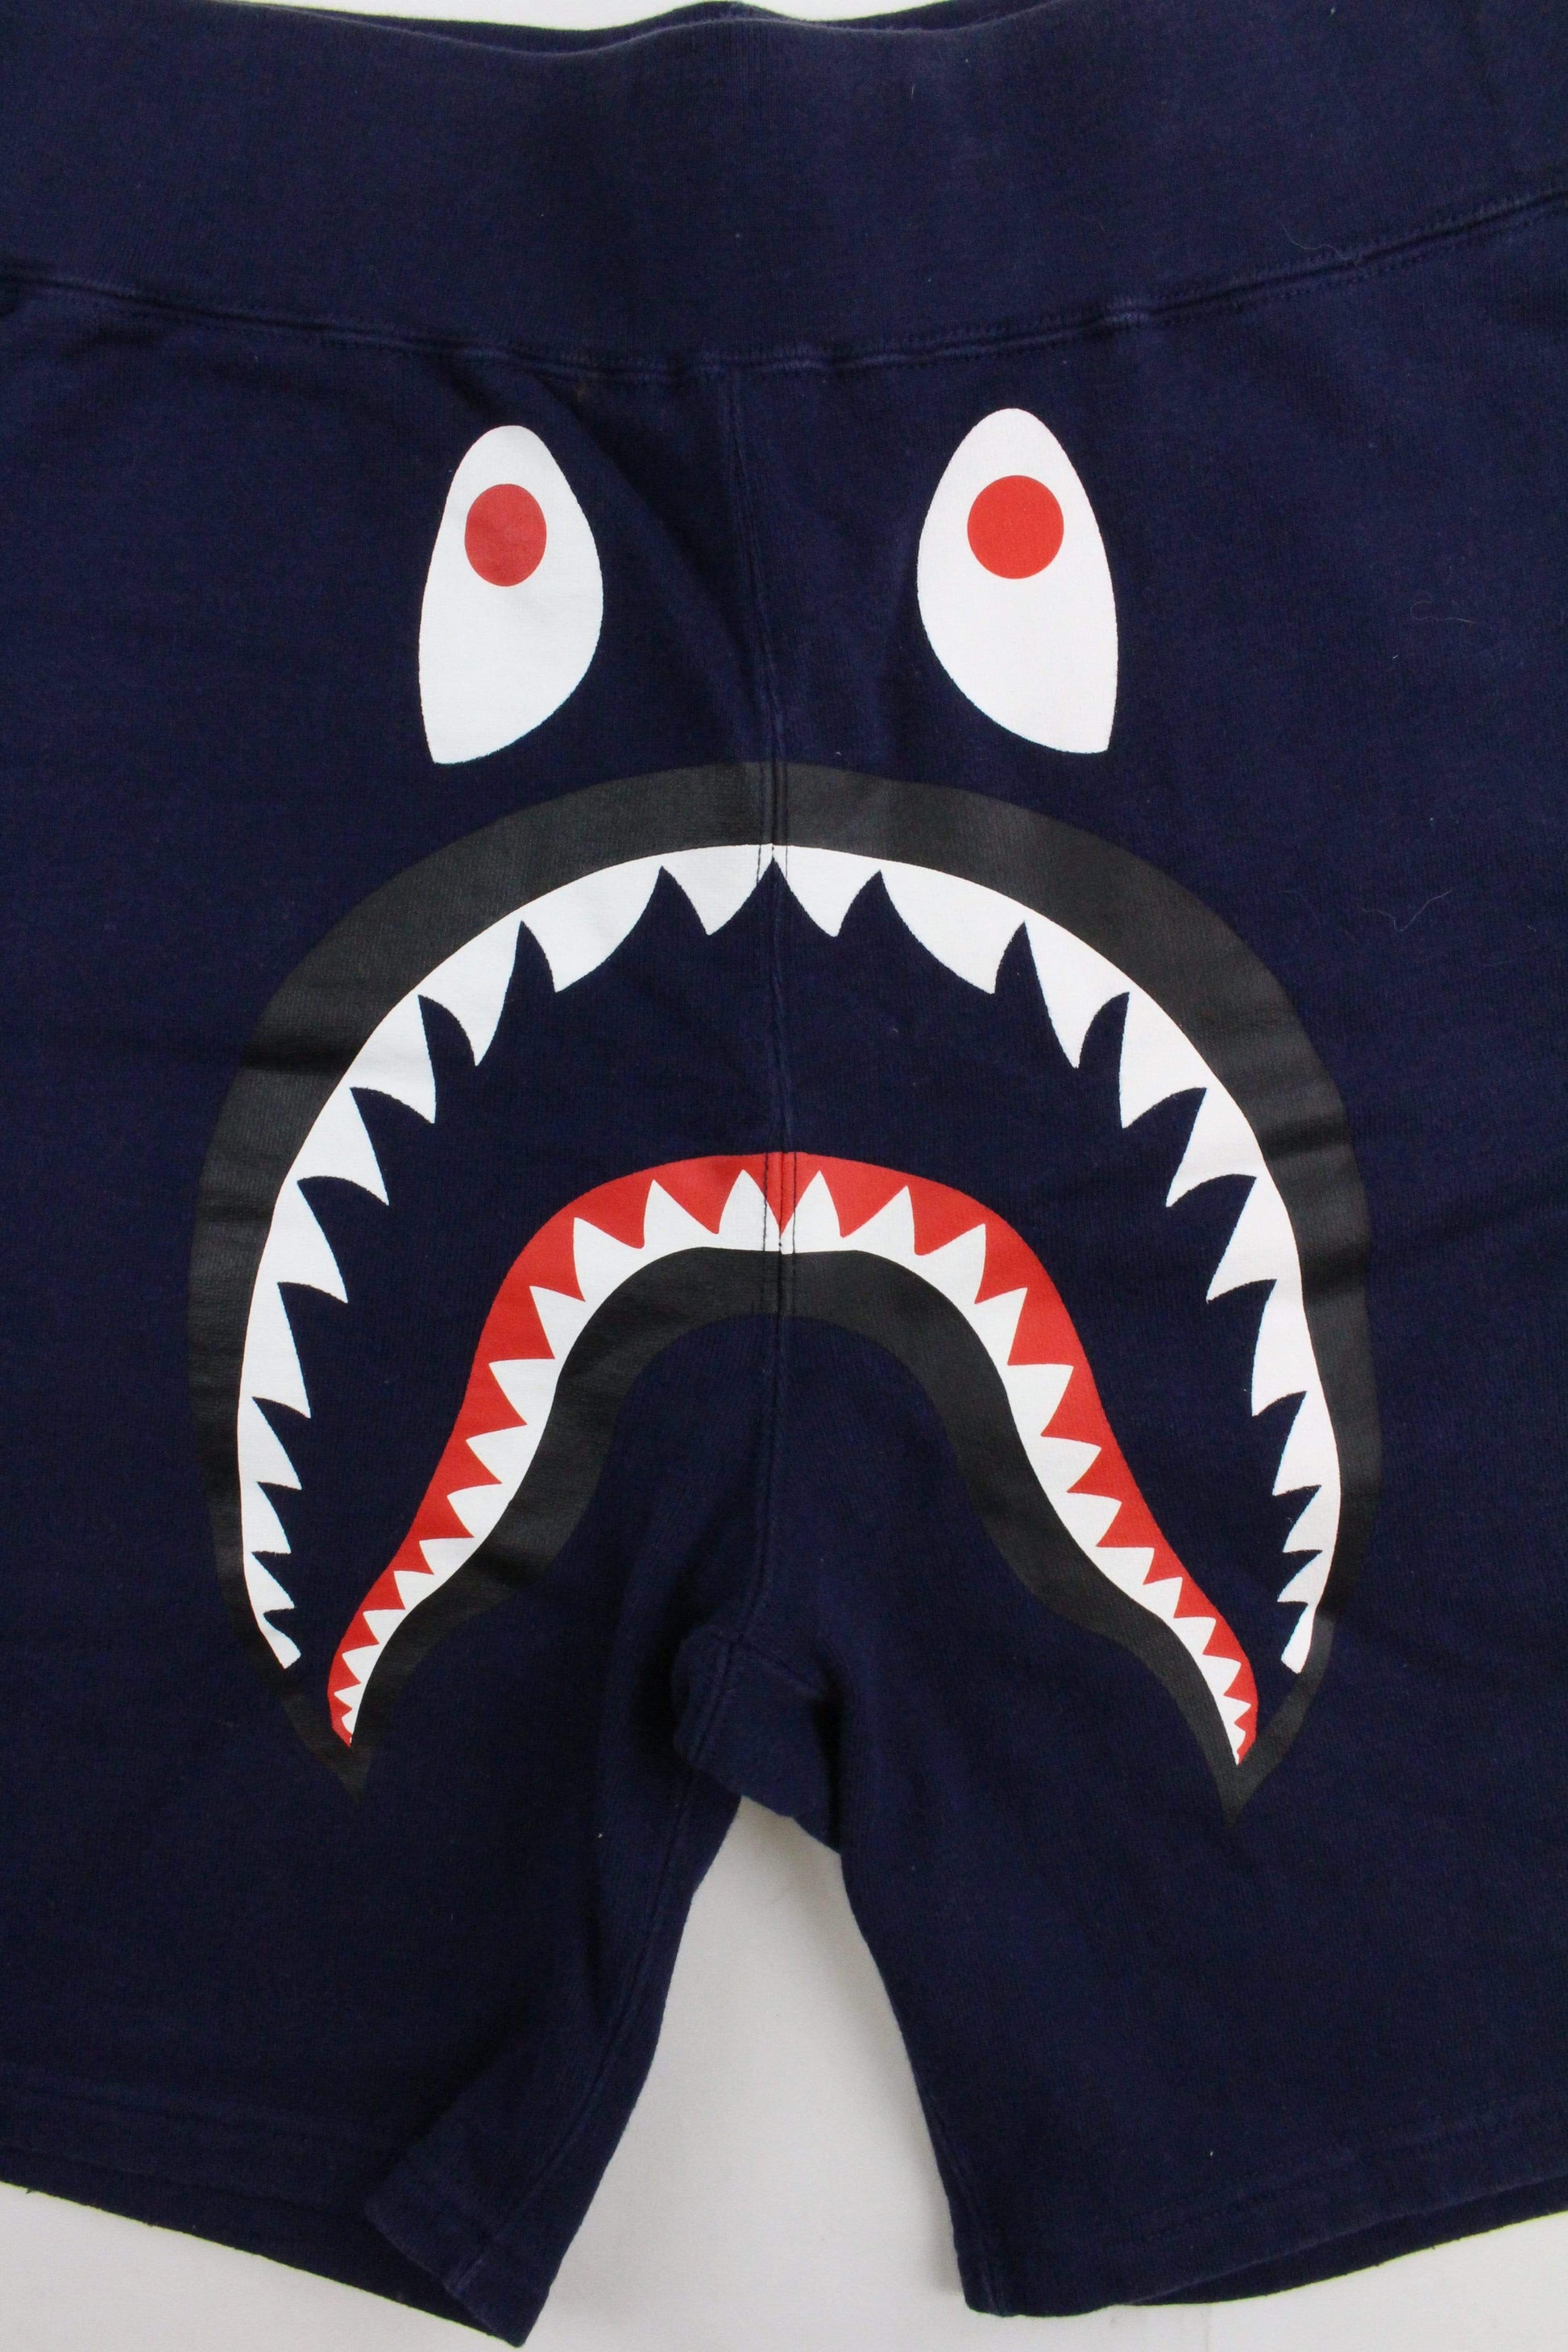 Bape Shark Shorts Navy - SaruGeneral